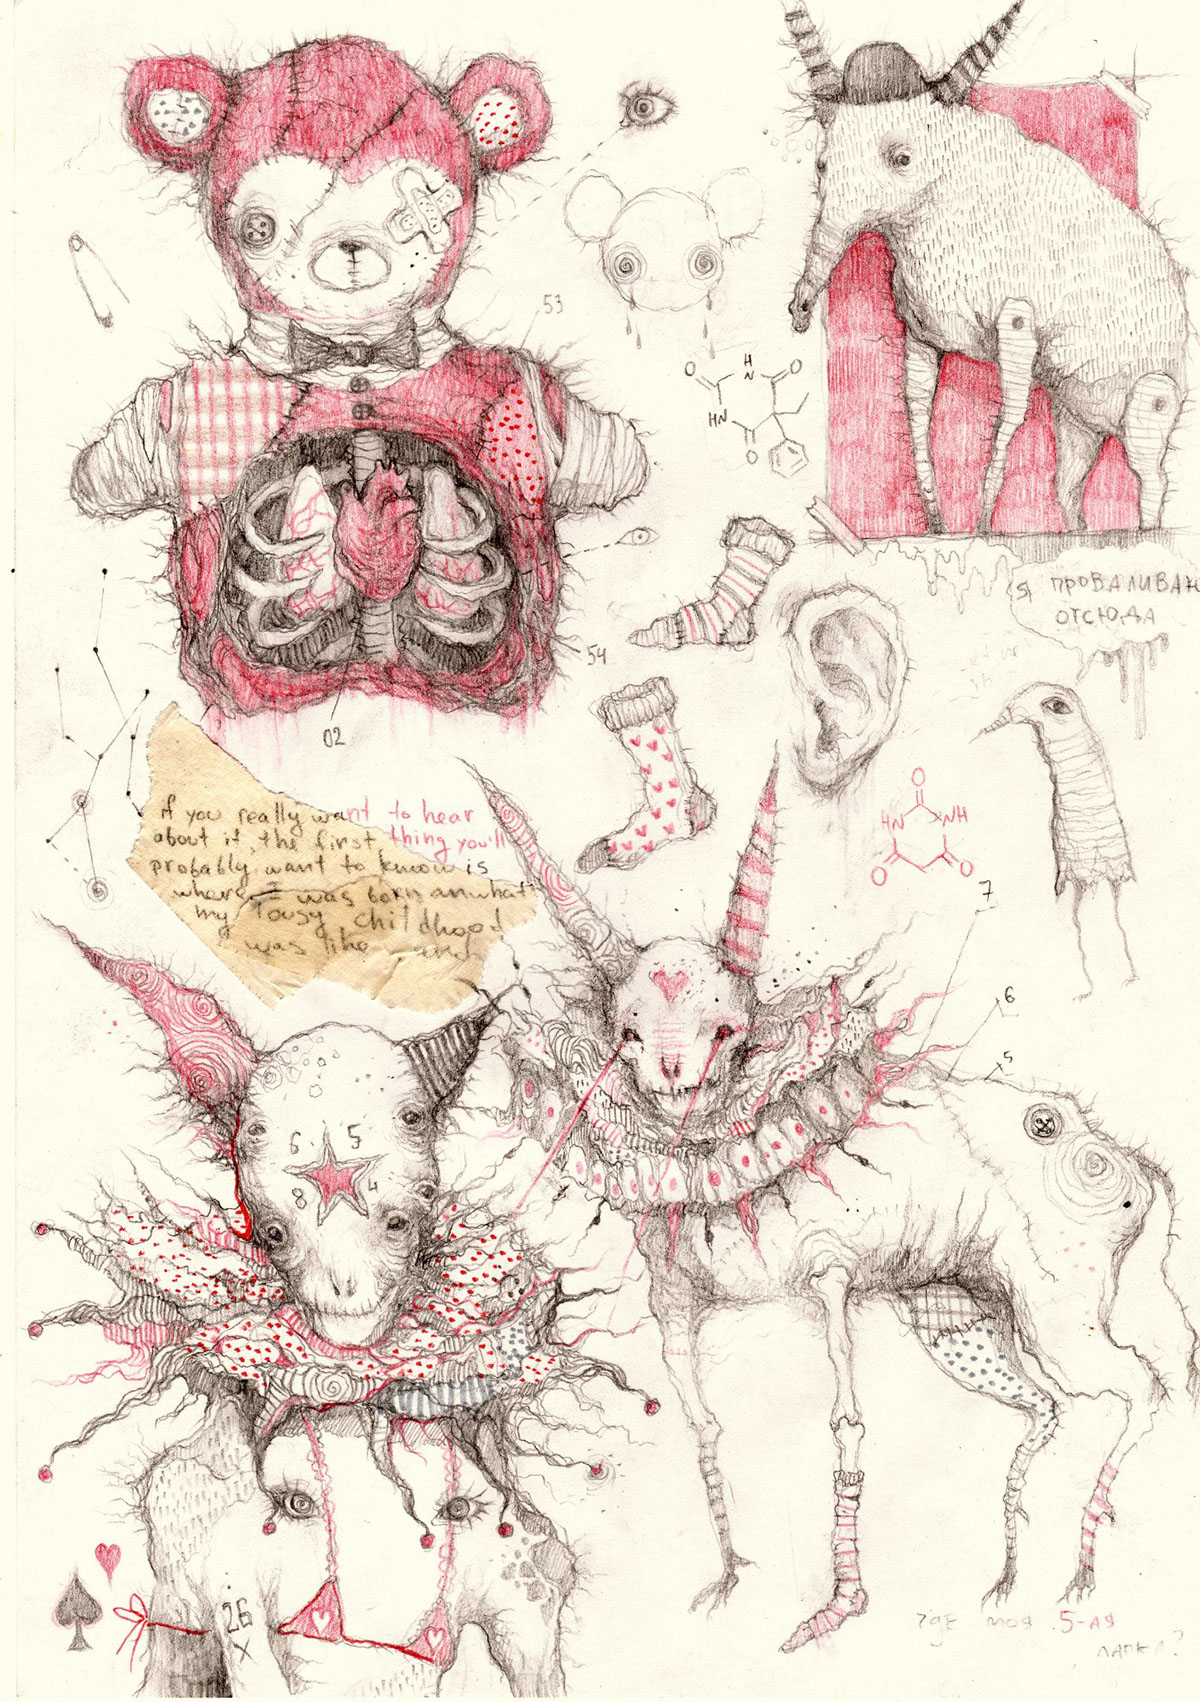 cute pink creature monster girl creepy Moody fantasy weird dark